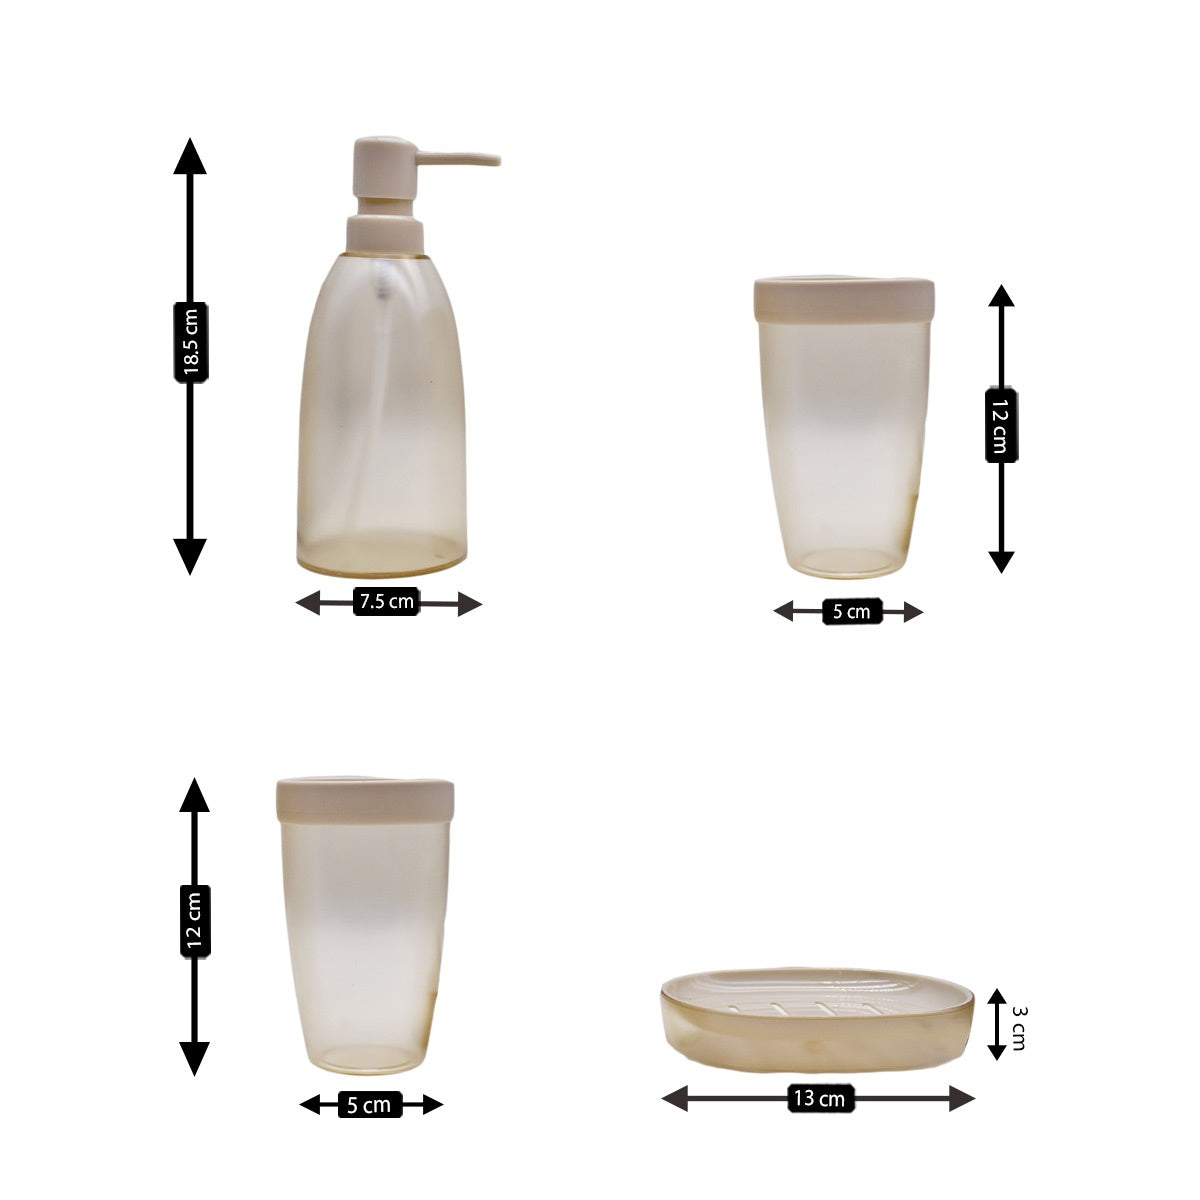 Acrylic Bathroom Accessories Set of 4 Bath Set with Soap Dispenser (8666)